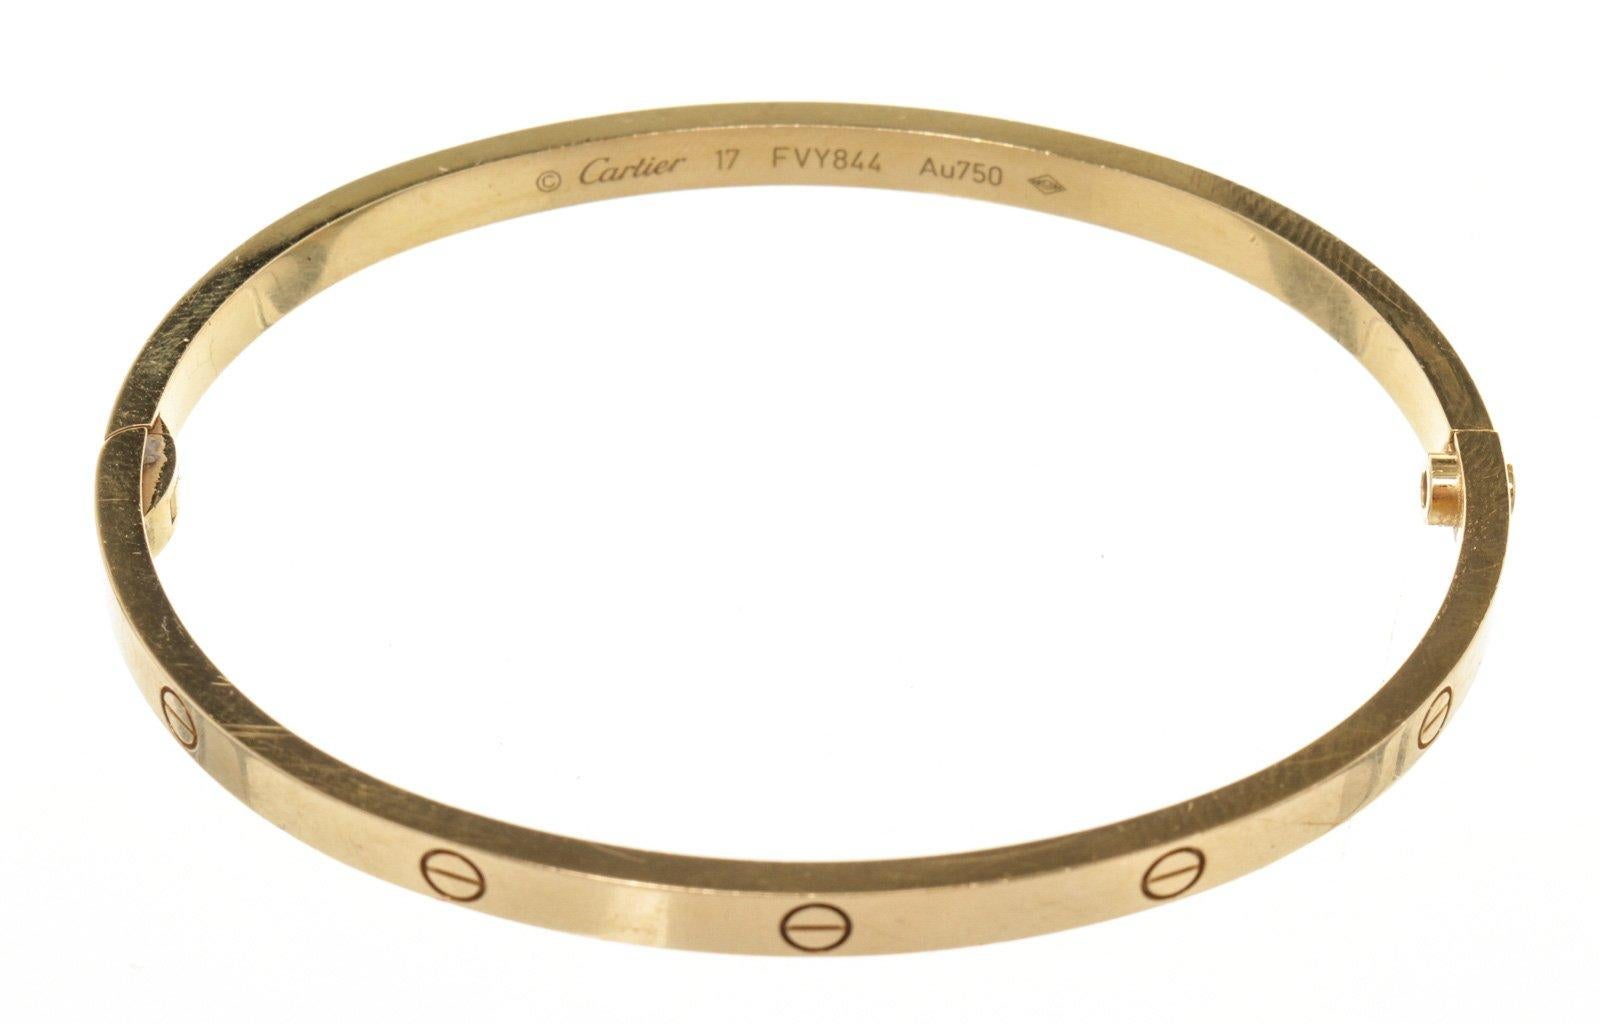 Cartier Gold Love Bracelet with gold-tone hardware. 

47110MSC